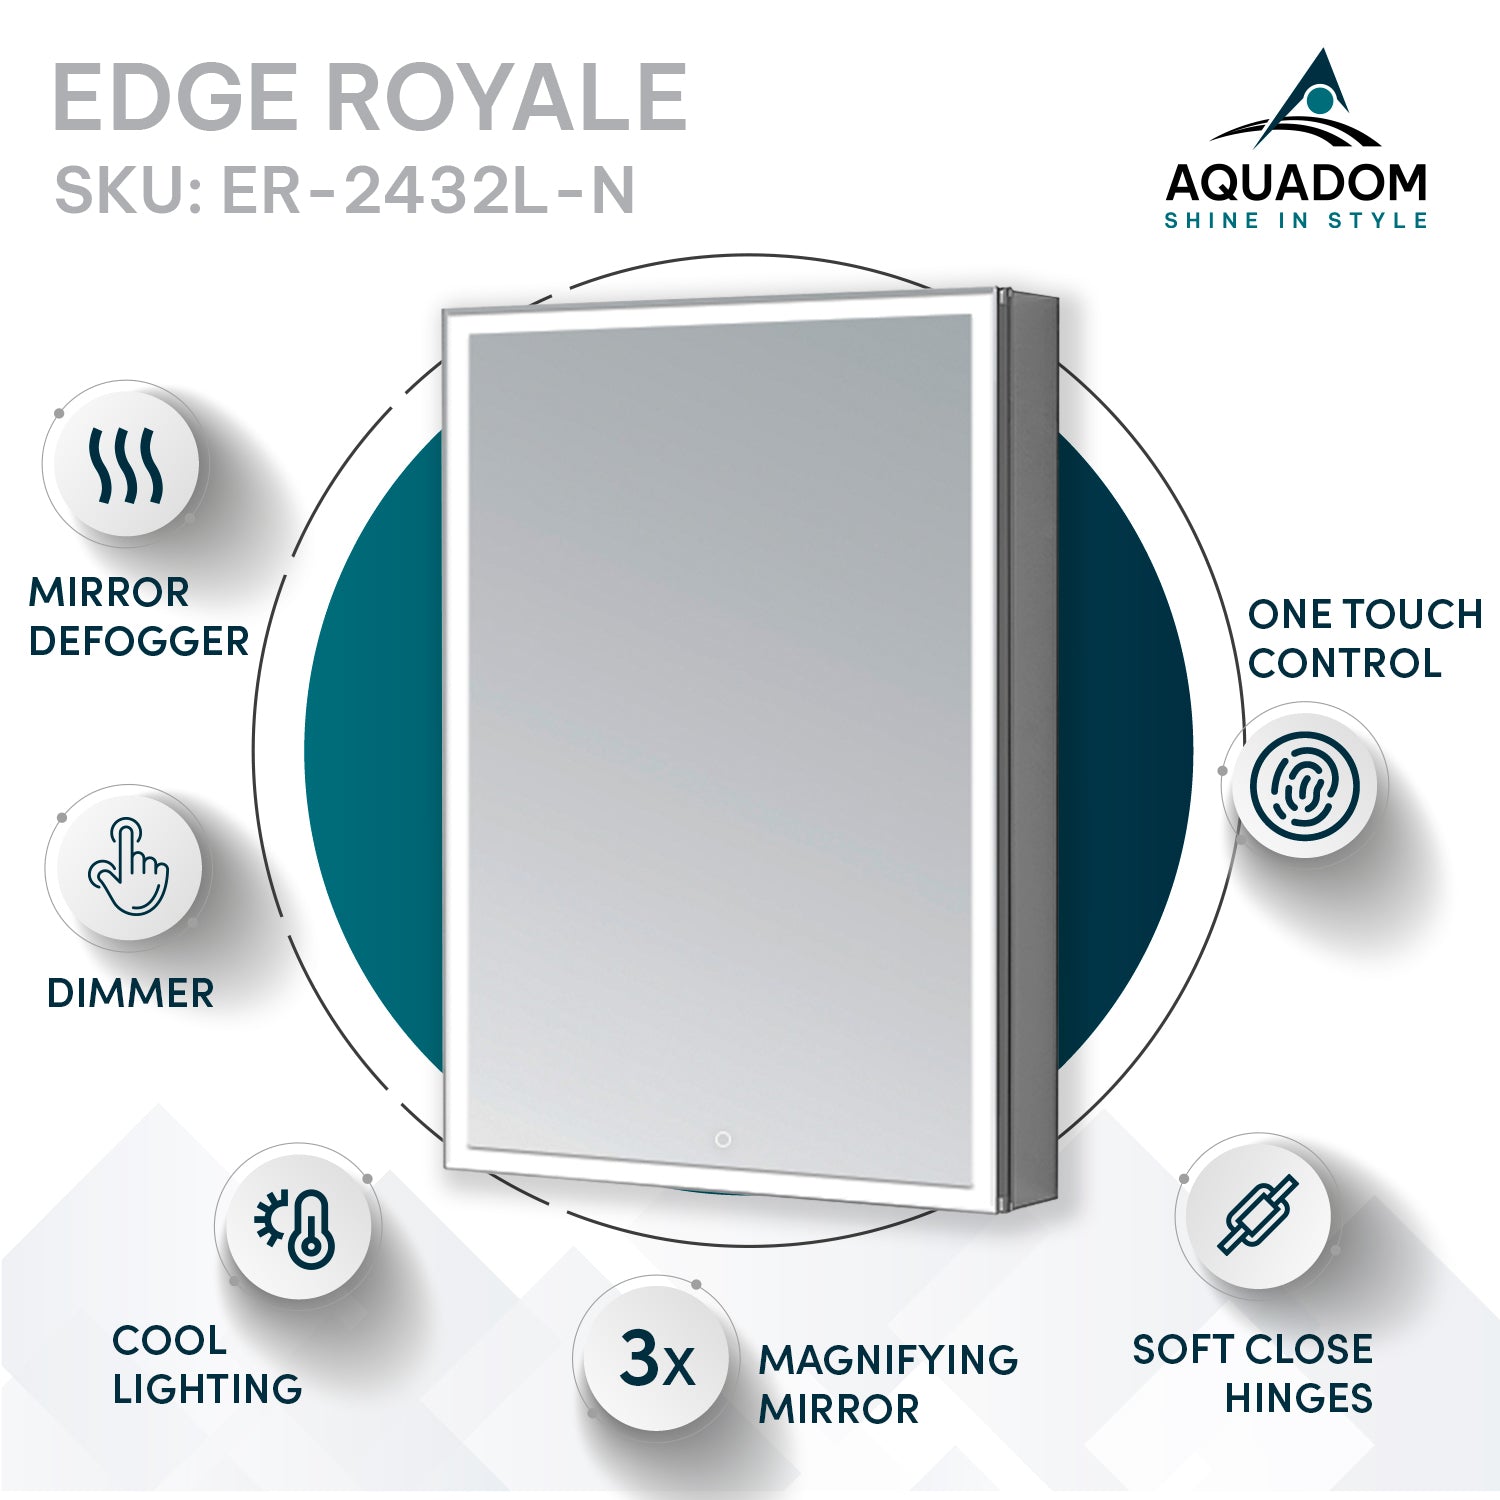 Aquadom Edge Royale 24x32 Left Hinge LED Lighted Medicine Cabinet